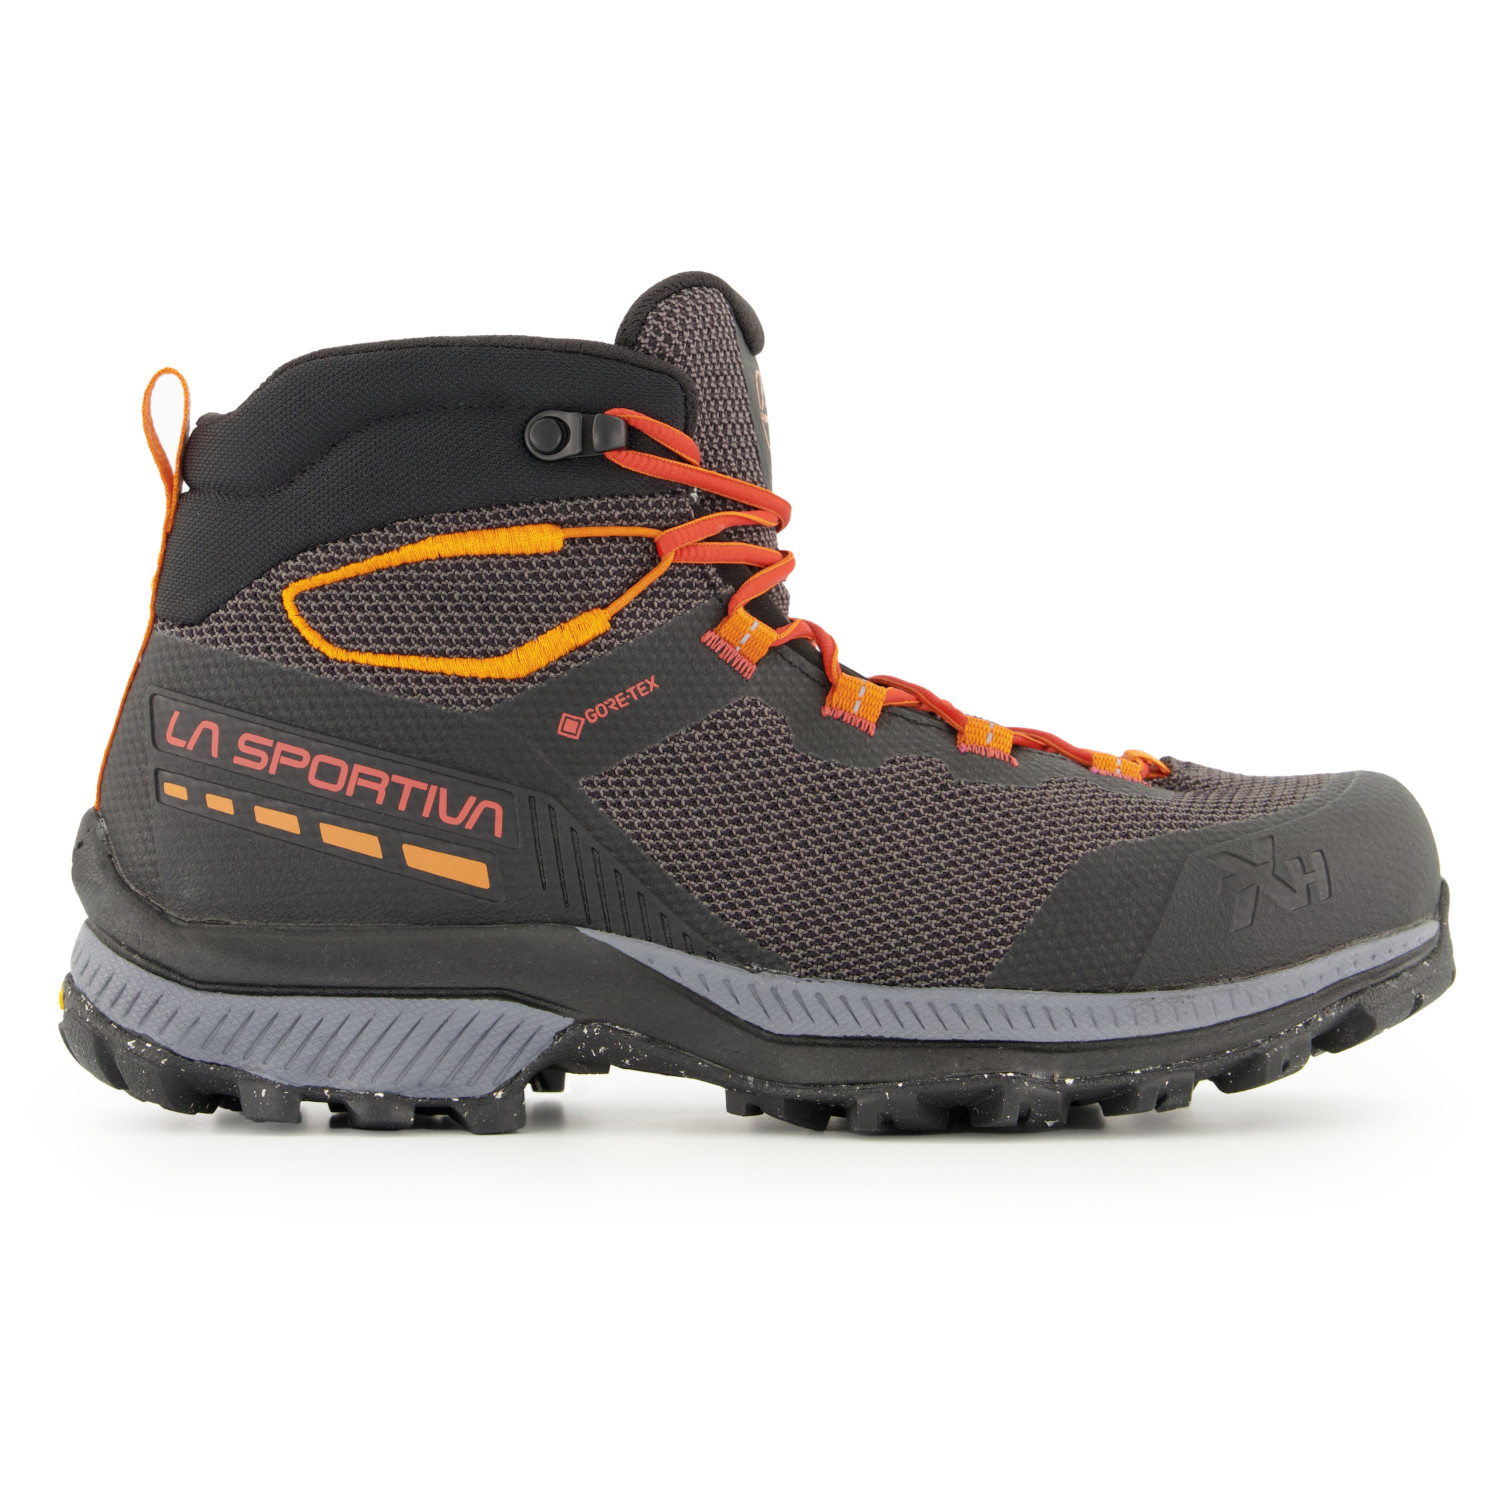 Ботинки для прогулки La Sportiva TX Hike Mid GTX, цвет Carbon/Saffron ботинки для прогулки la sportiva women s tx hike mid gtx цвет topaz carbon